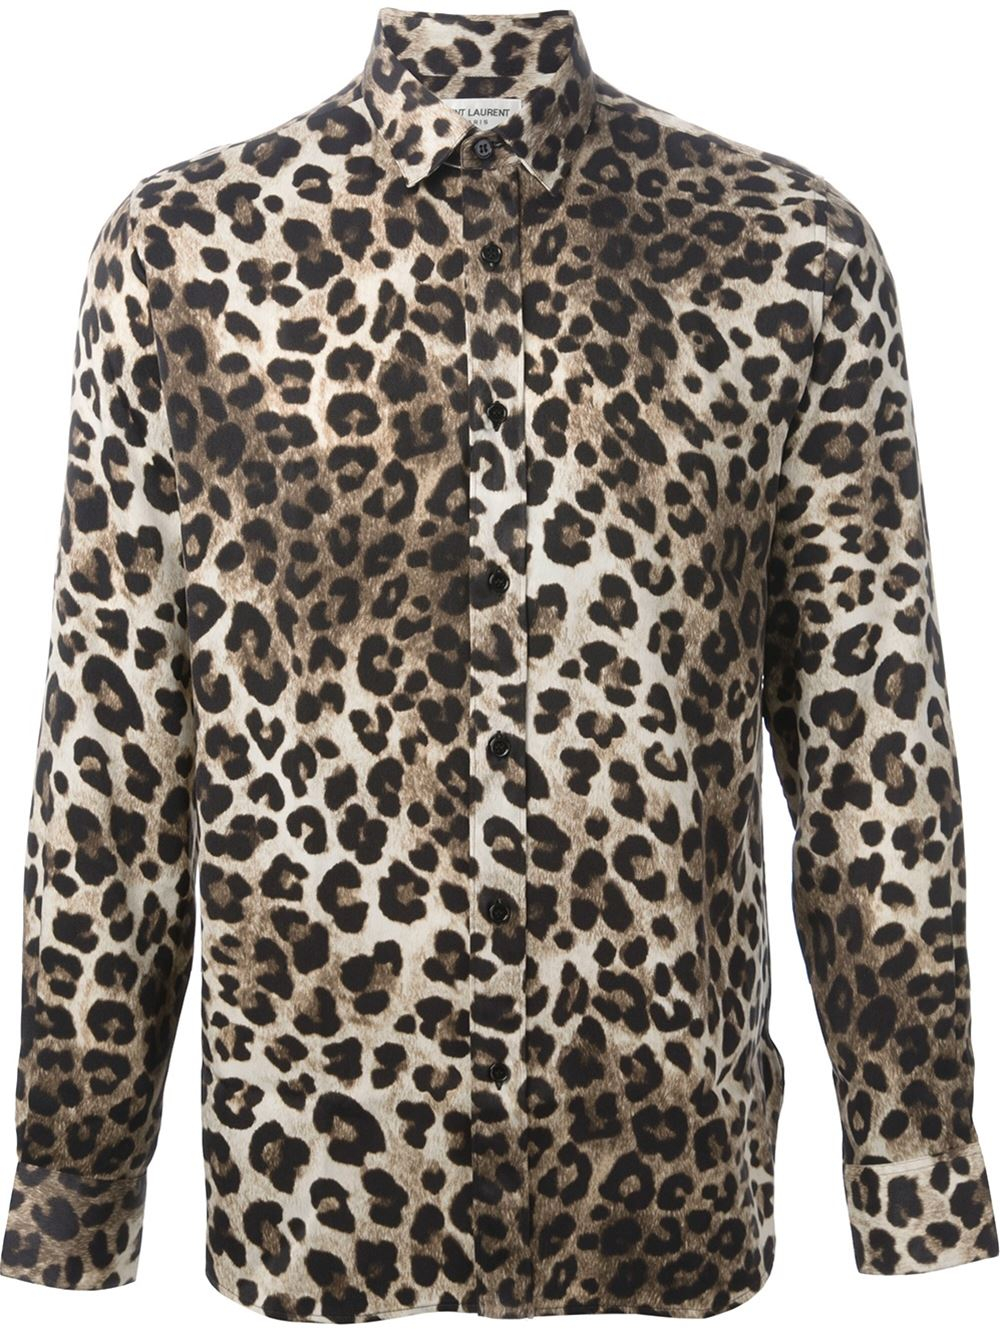 Saint Laurent Leopard Print Shirt in Brown for Men - Lyst